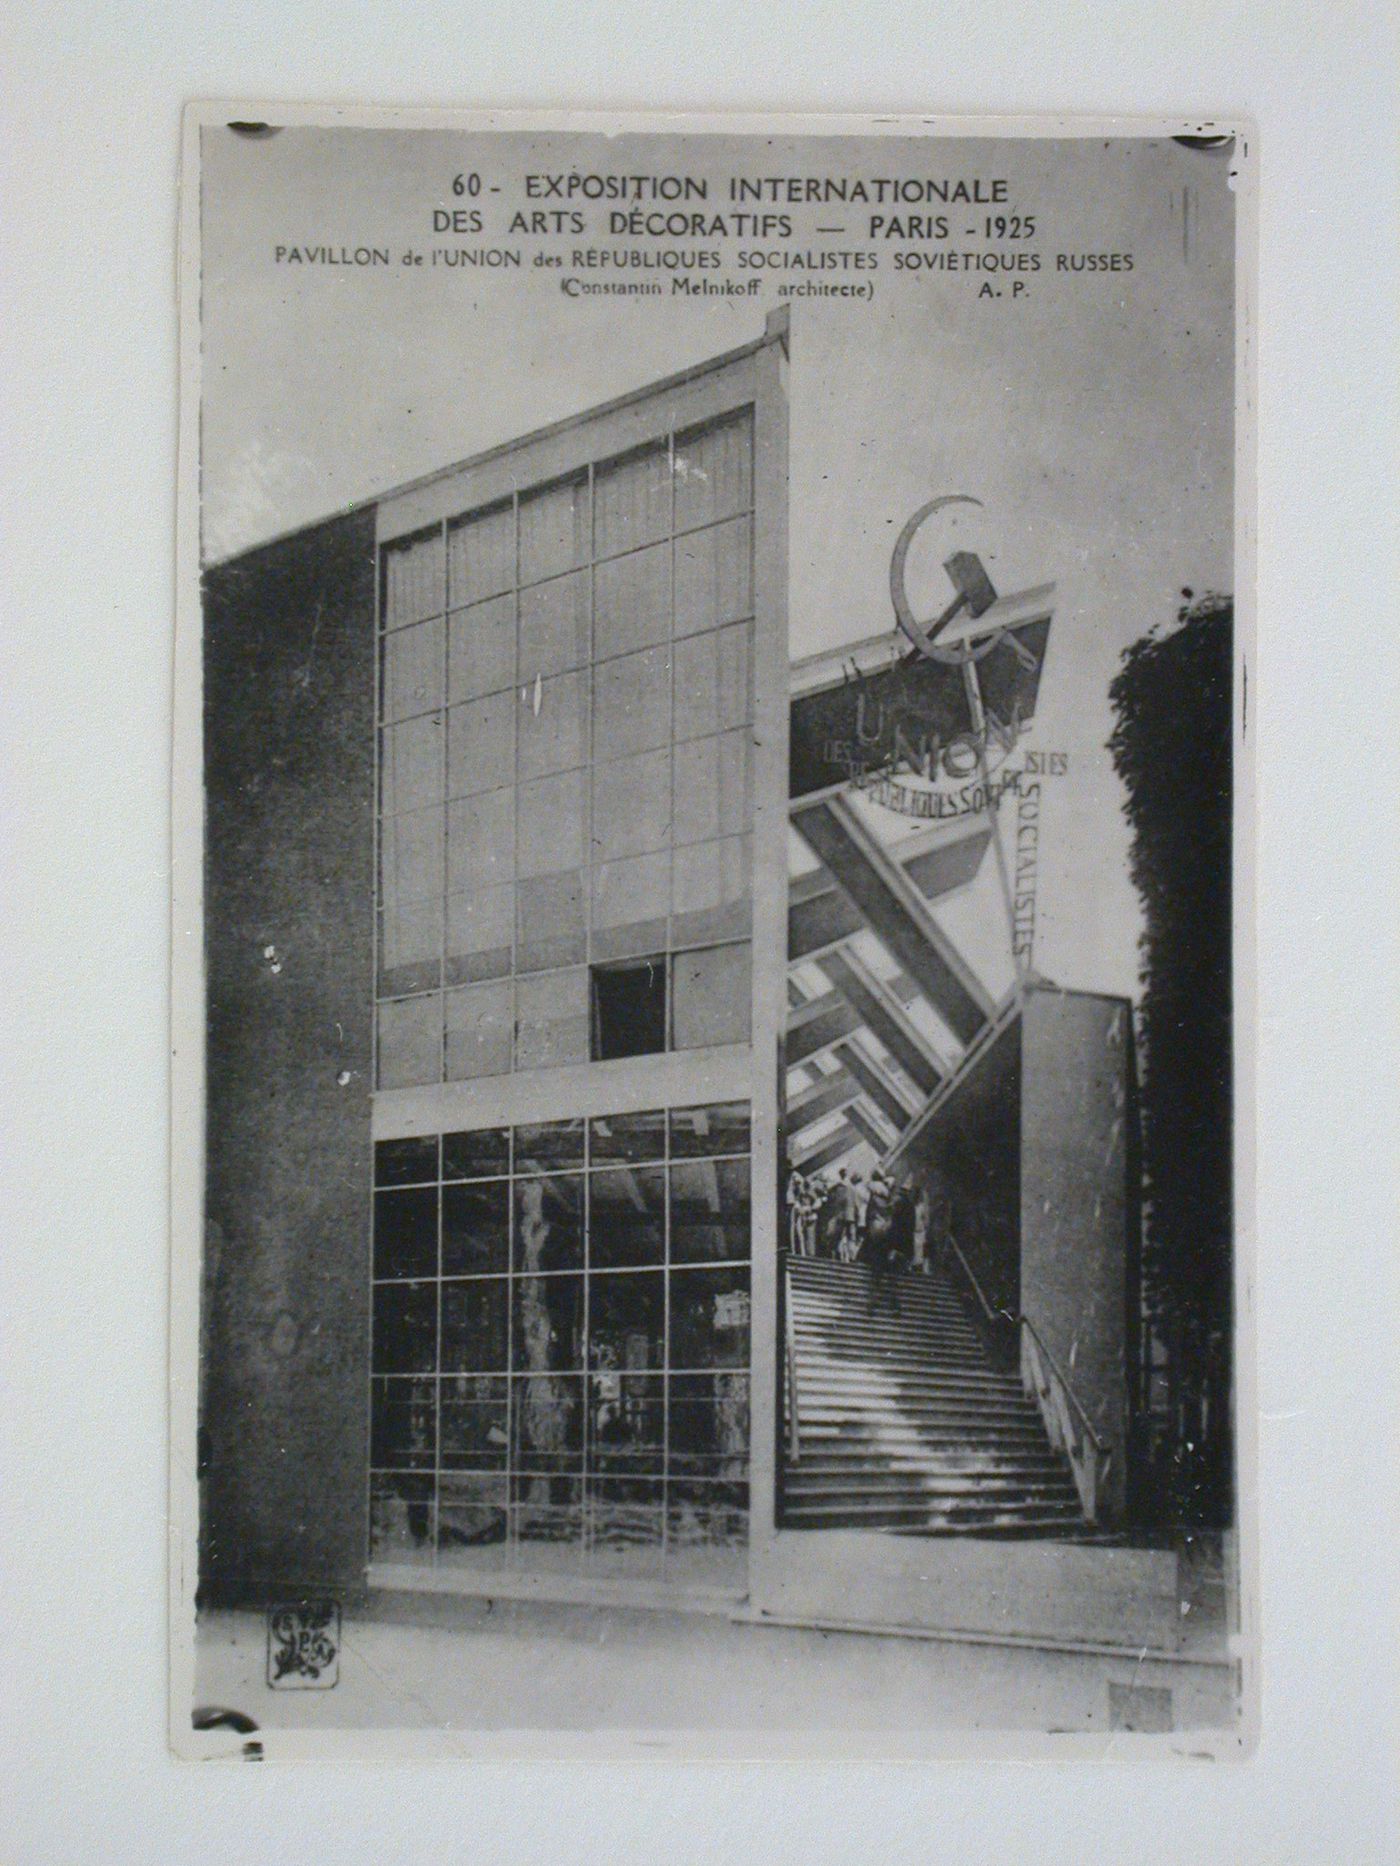 Photograph of a poster of the Soviet Pavilion, 1925 Paris Exhibition of the Decorative Arts